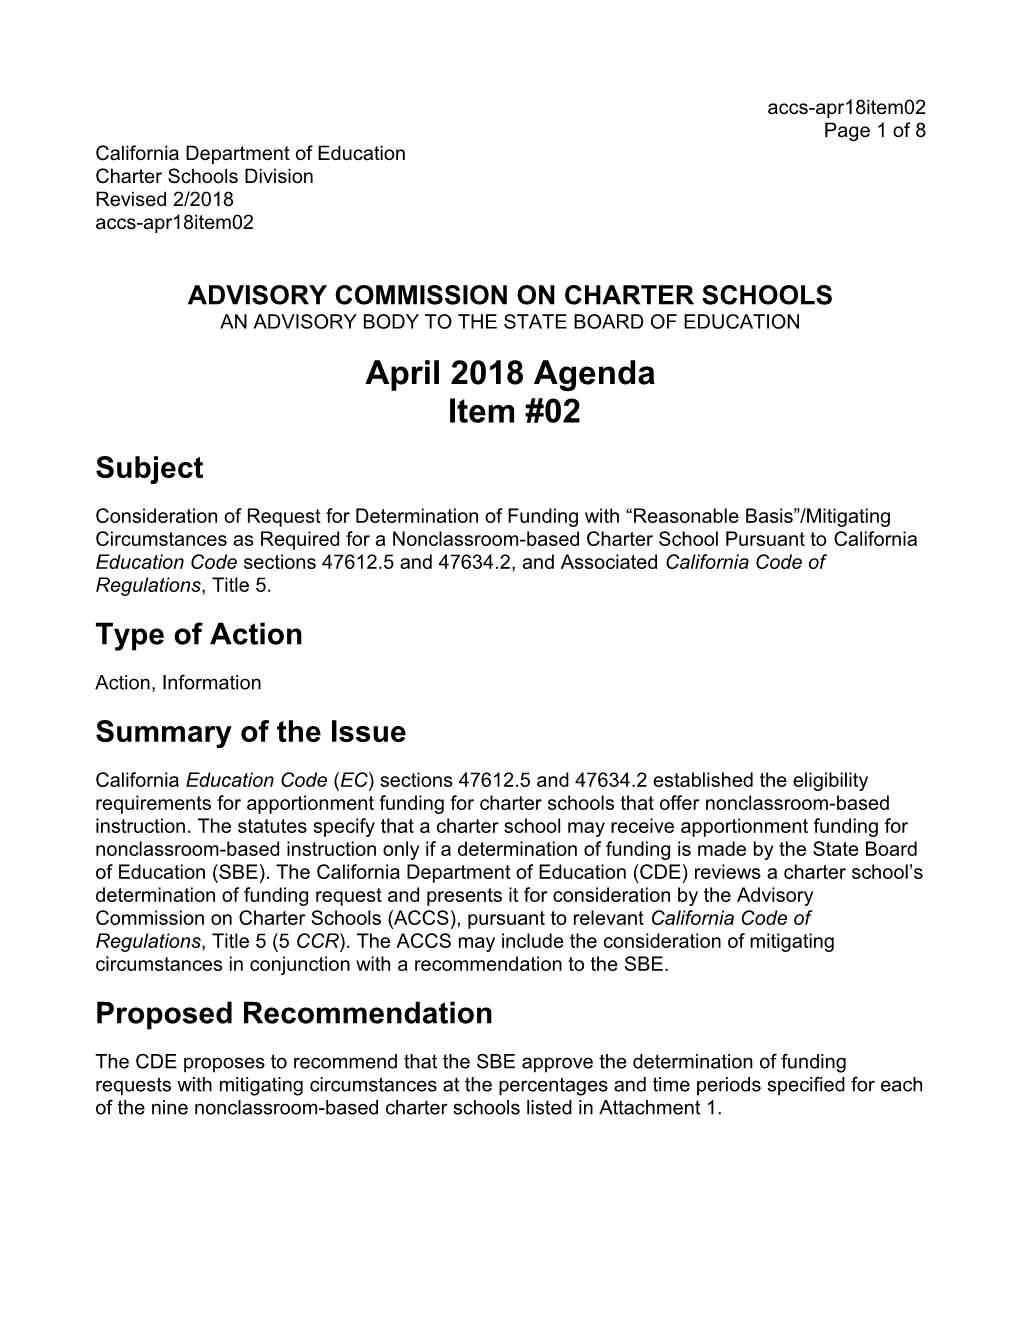 April 2018 ACCS Agenda Item 02 - Advisory Commission on Charter Schools (CA State Board